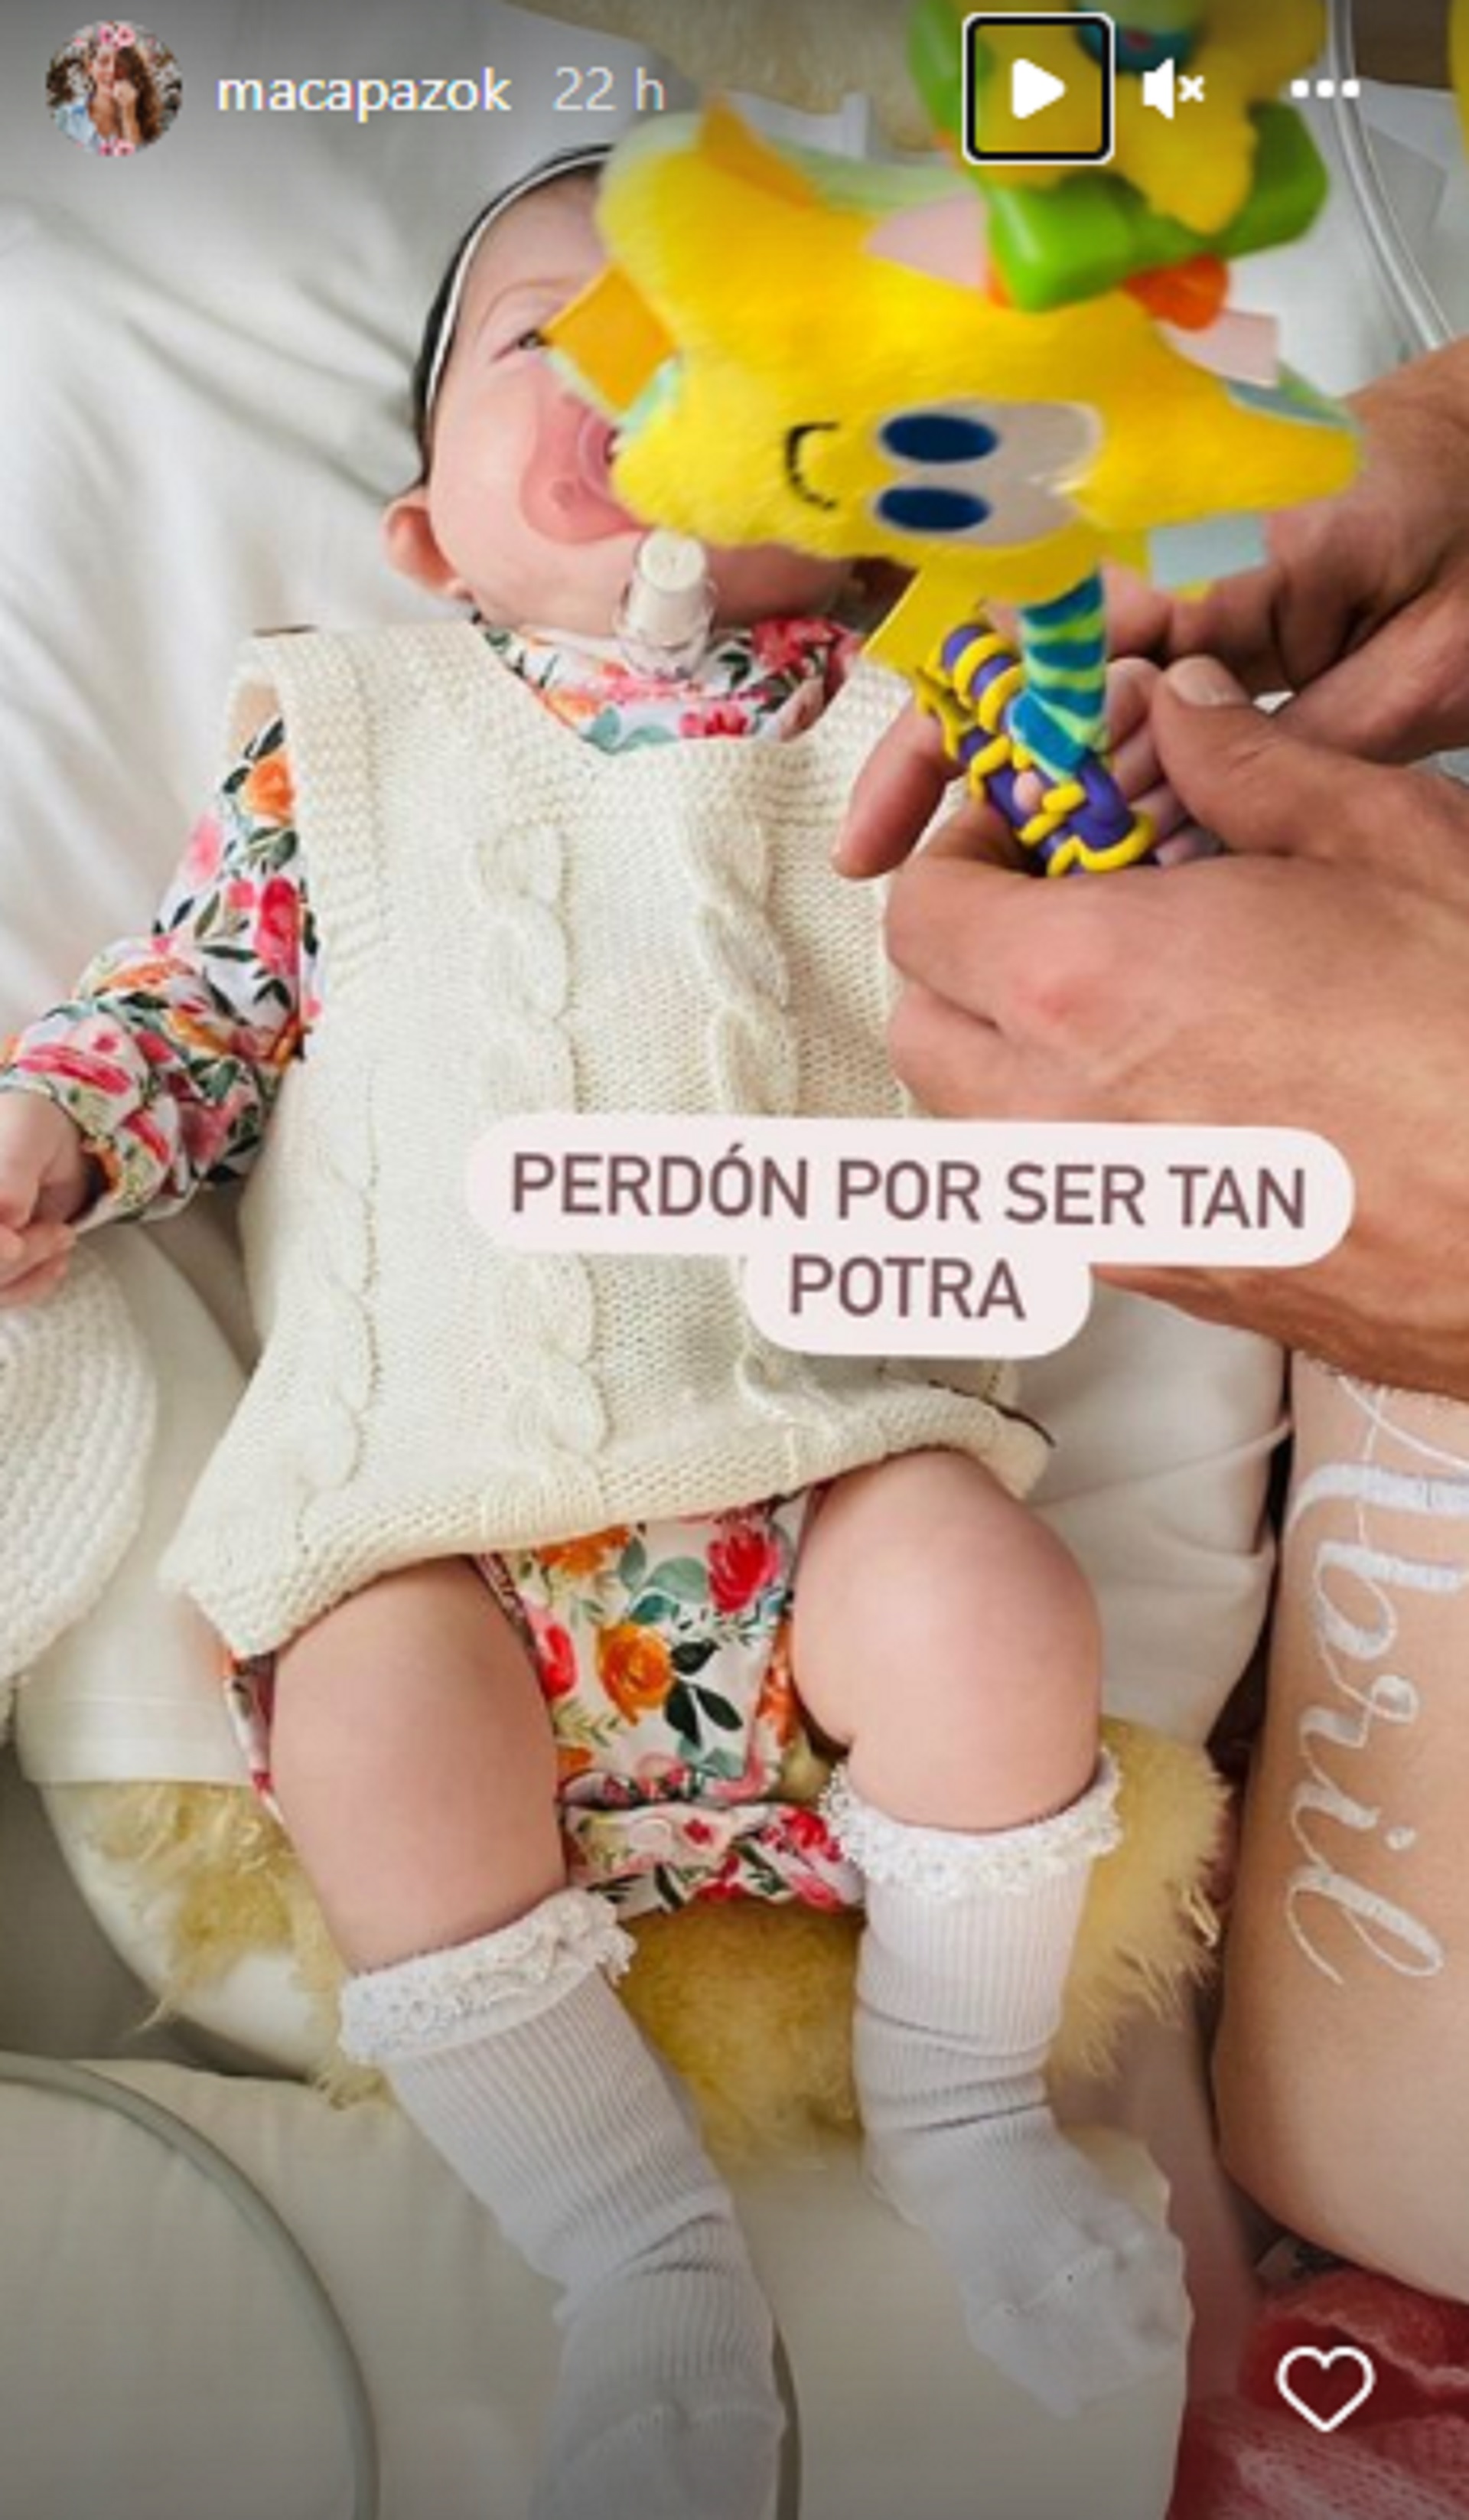 Macarena Paz shared photos of her daughter April on her social media